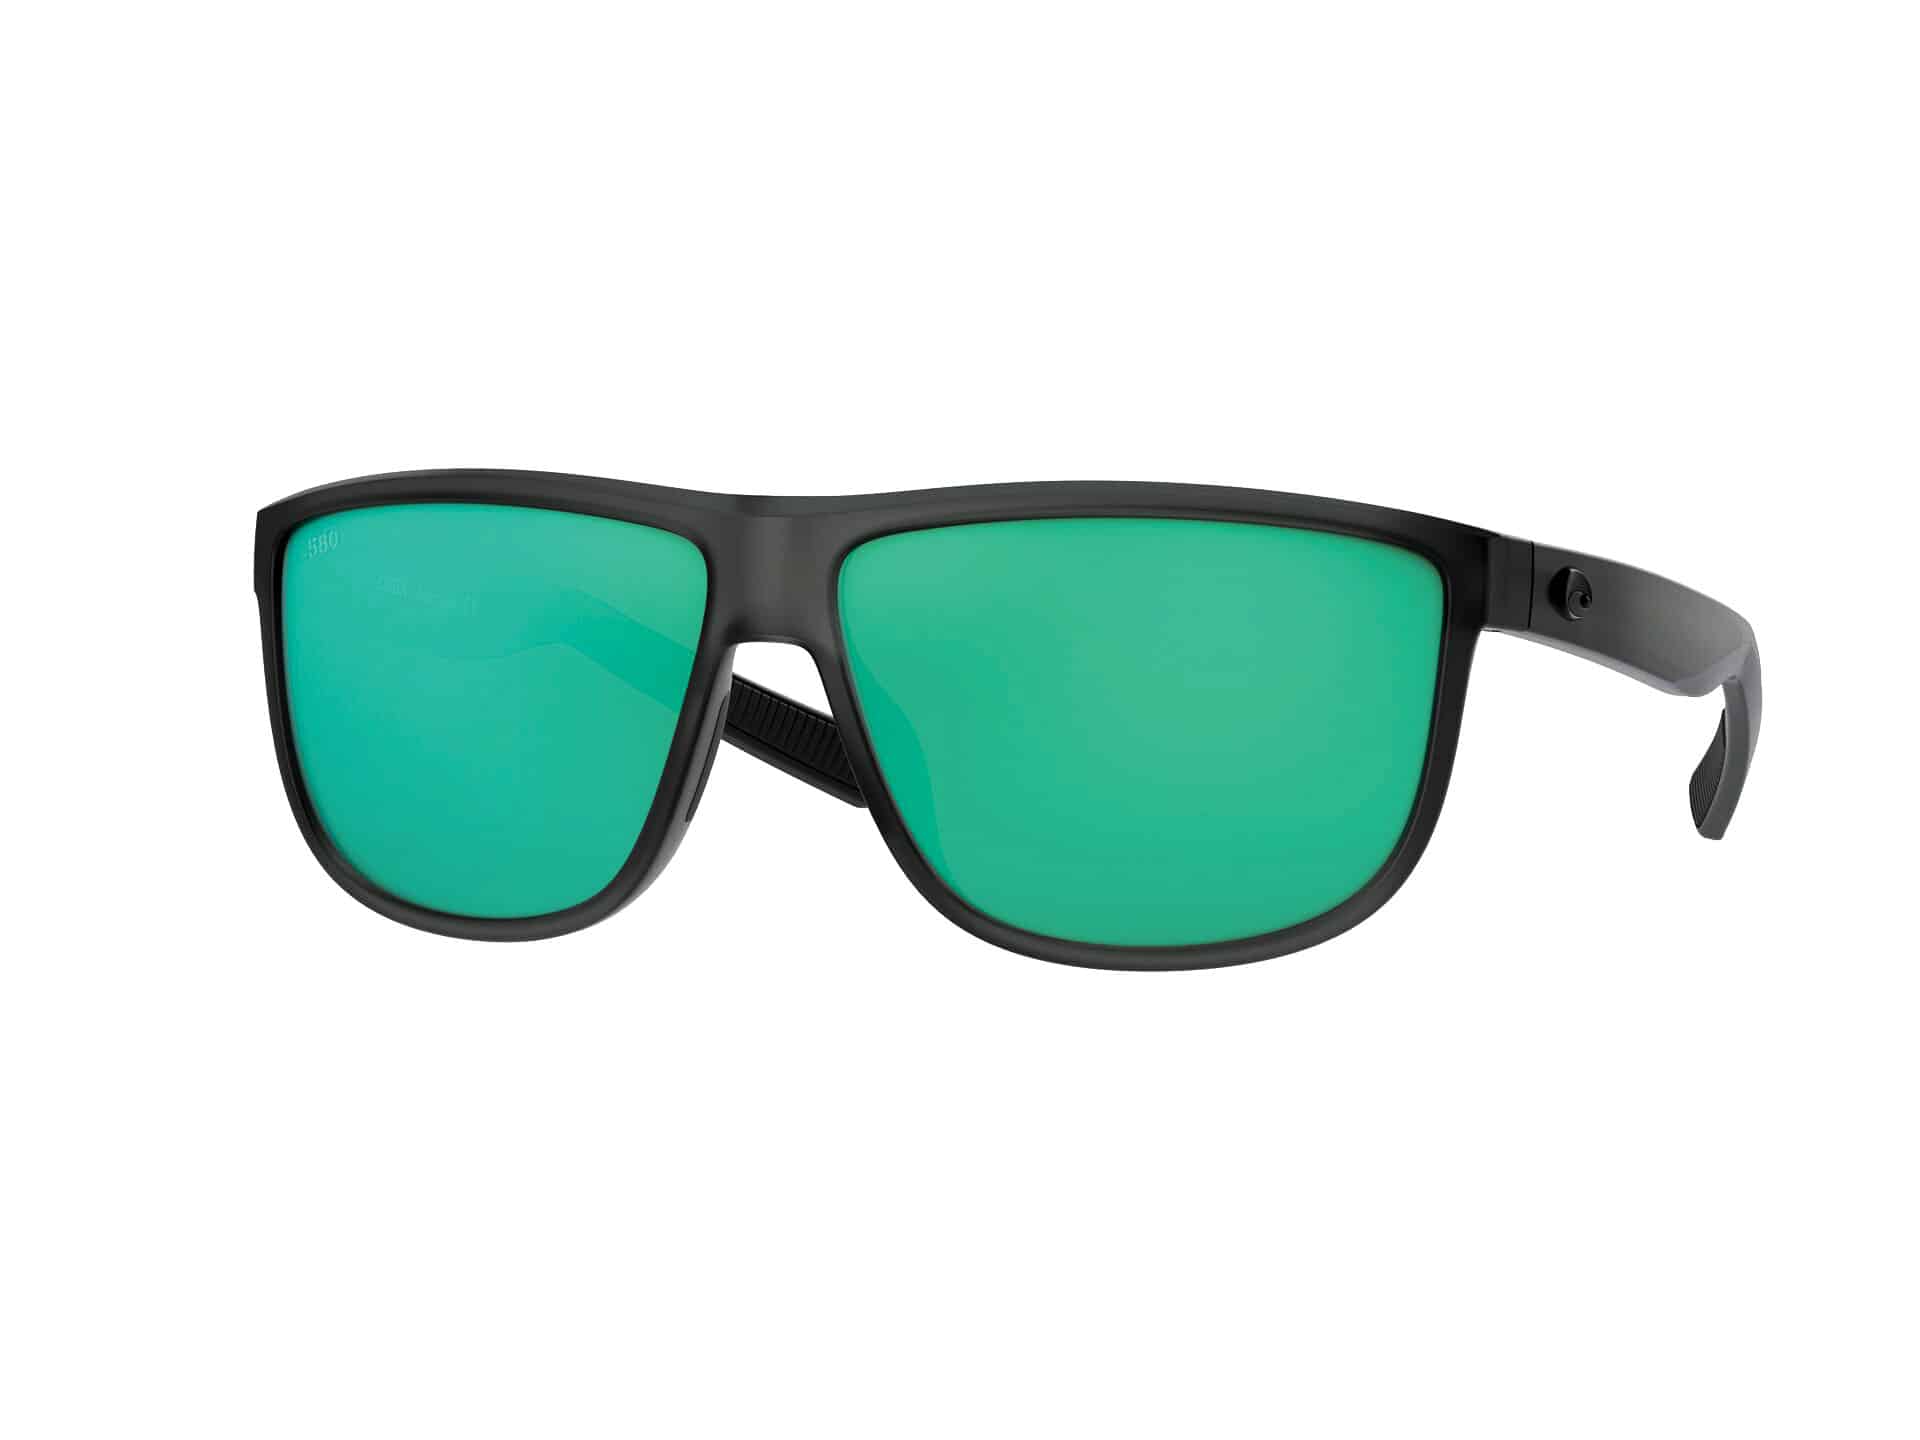 Oakley Sunglasses Lens Tint & Color Complete Guide